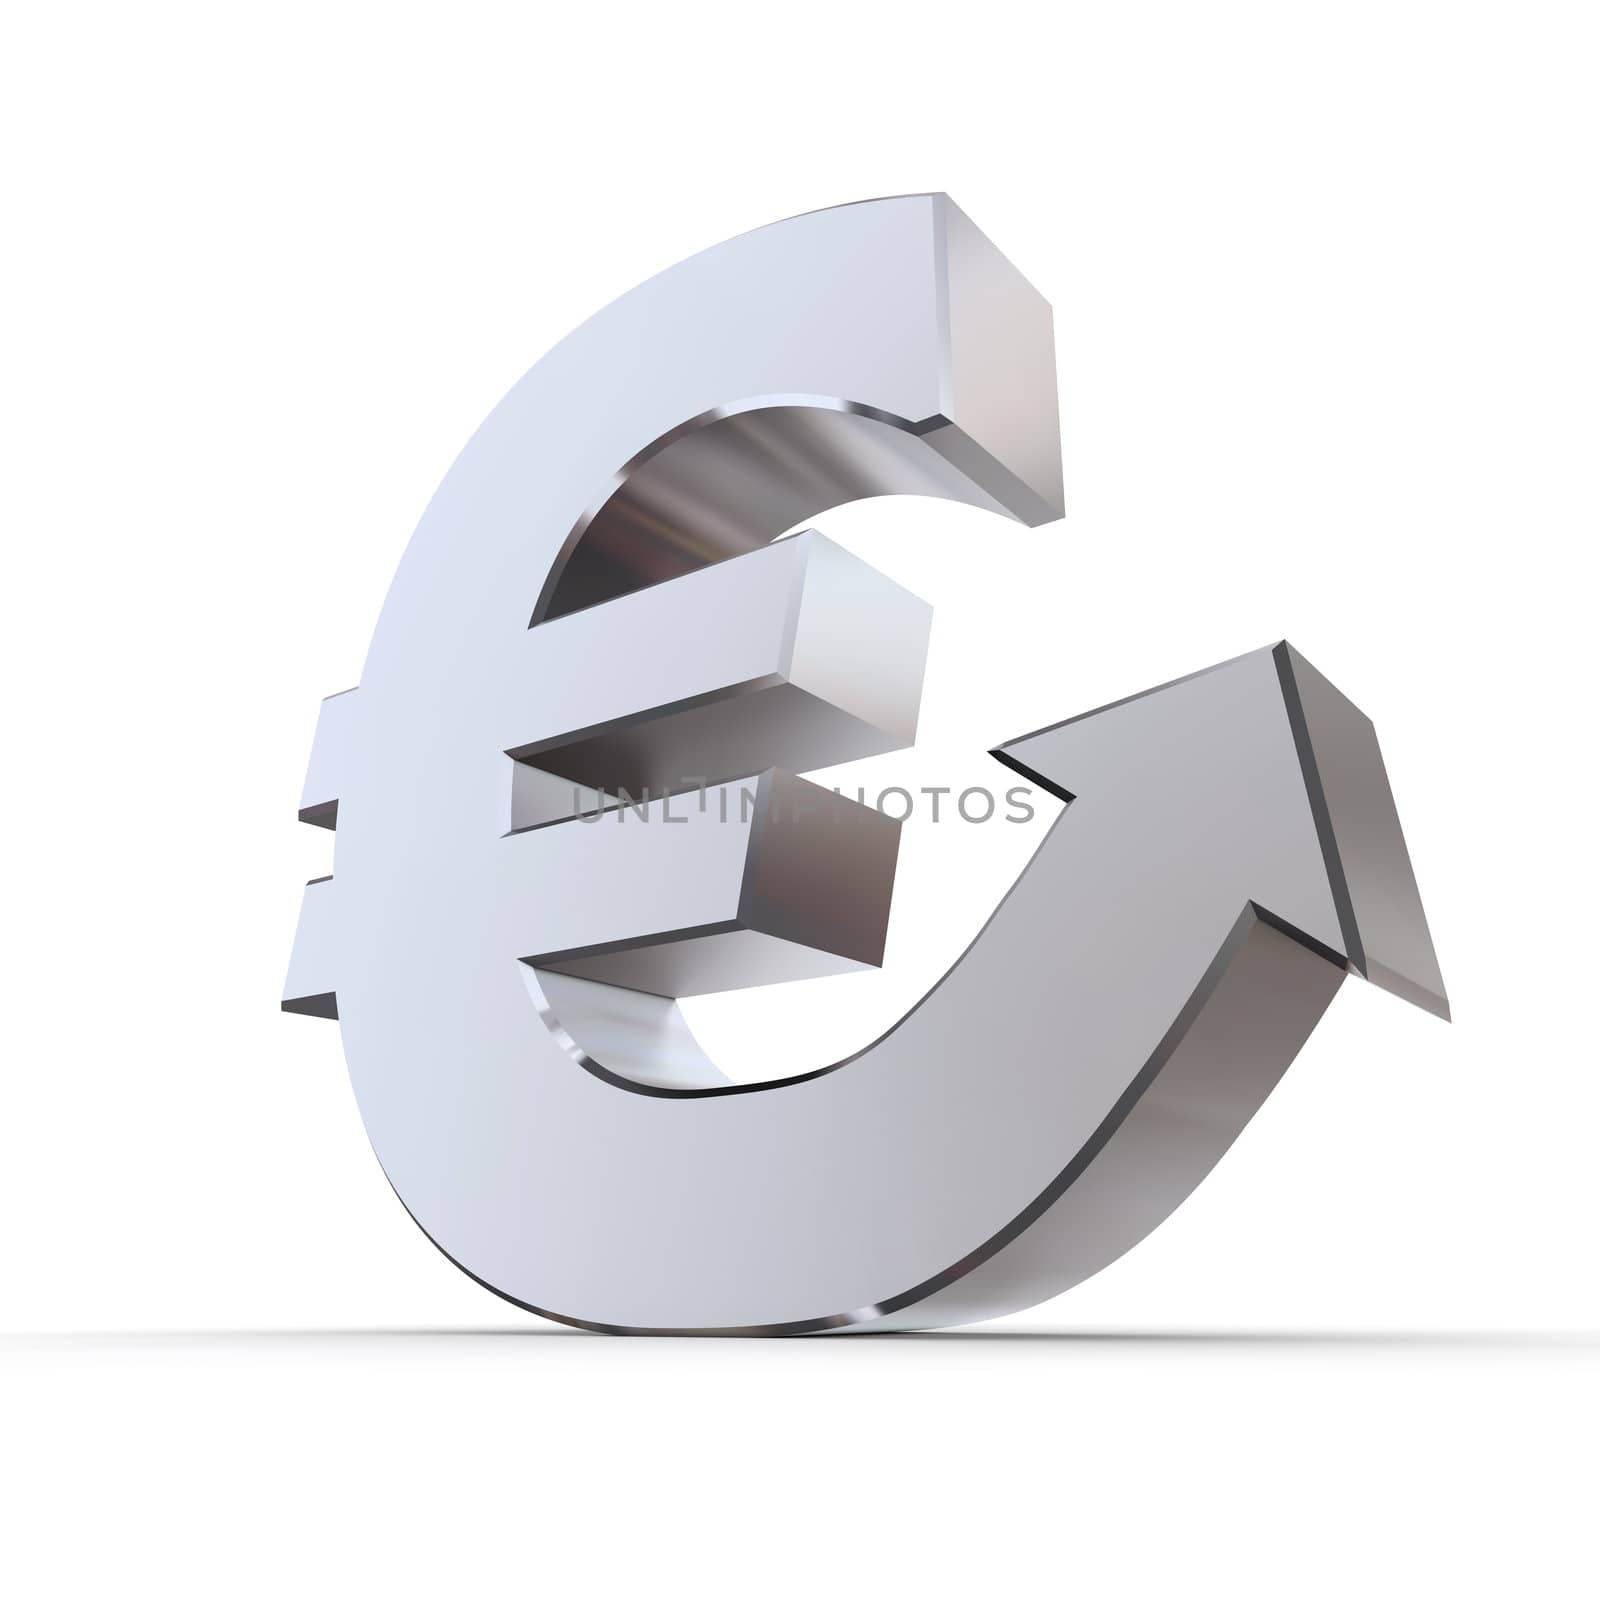 shiny silver metallic euro symbol with an arrow rising up